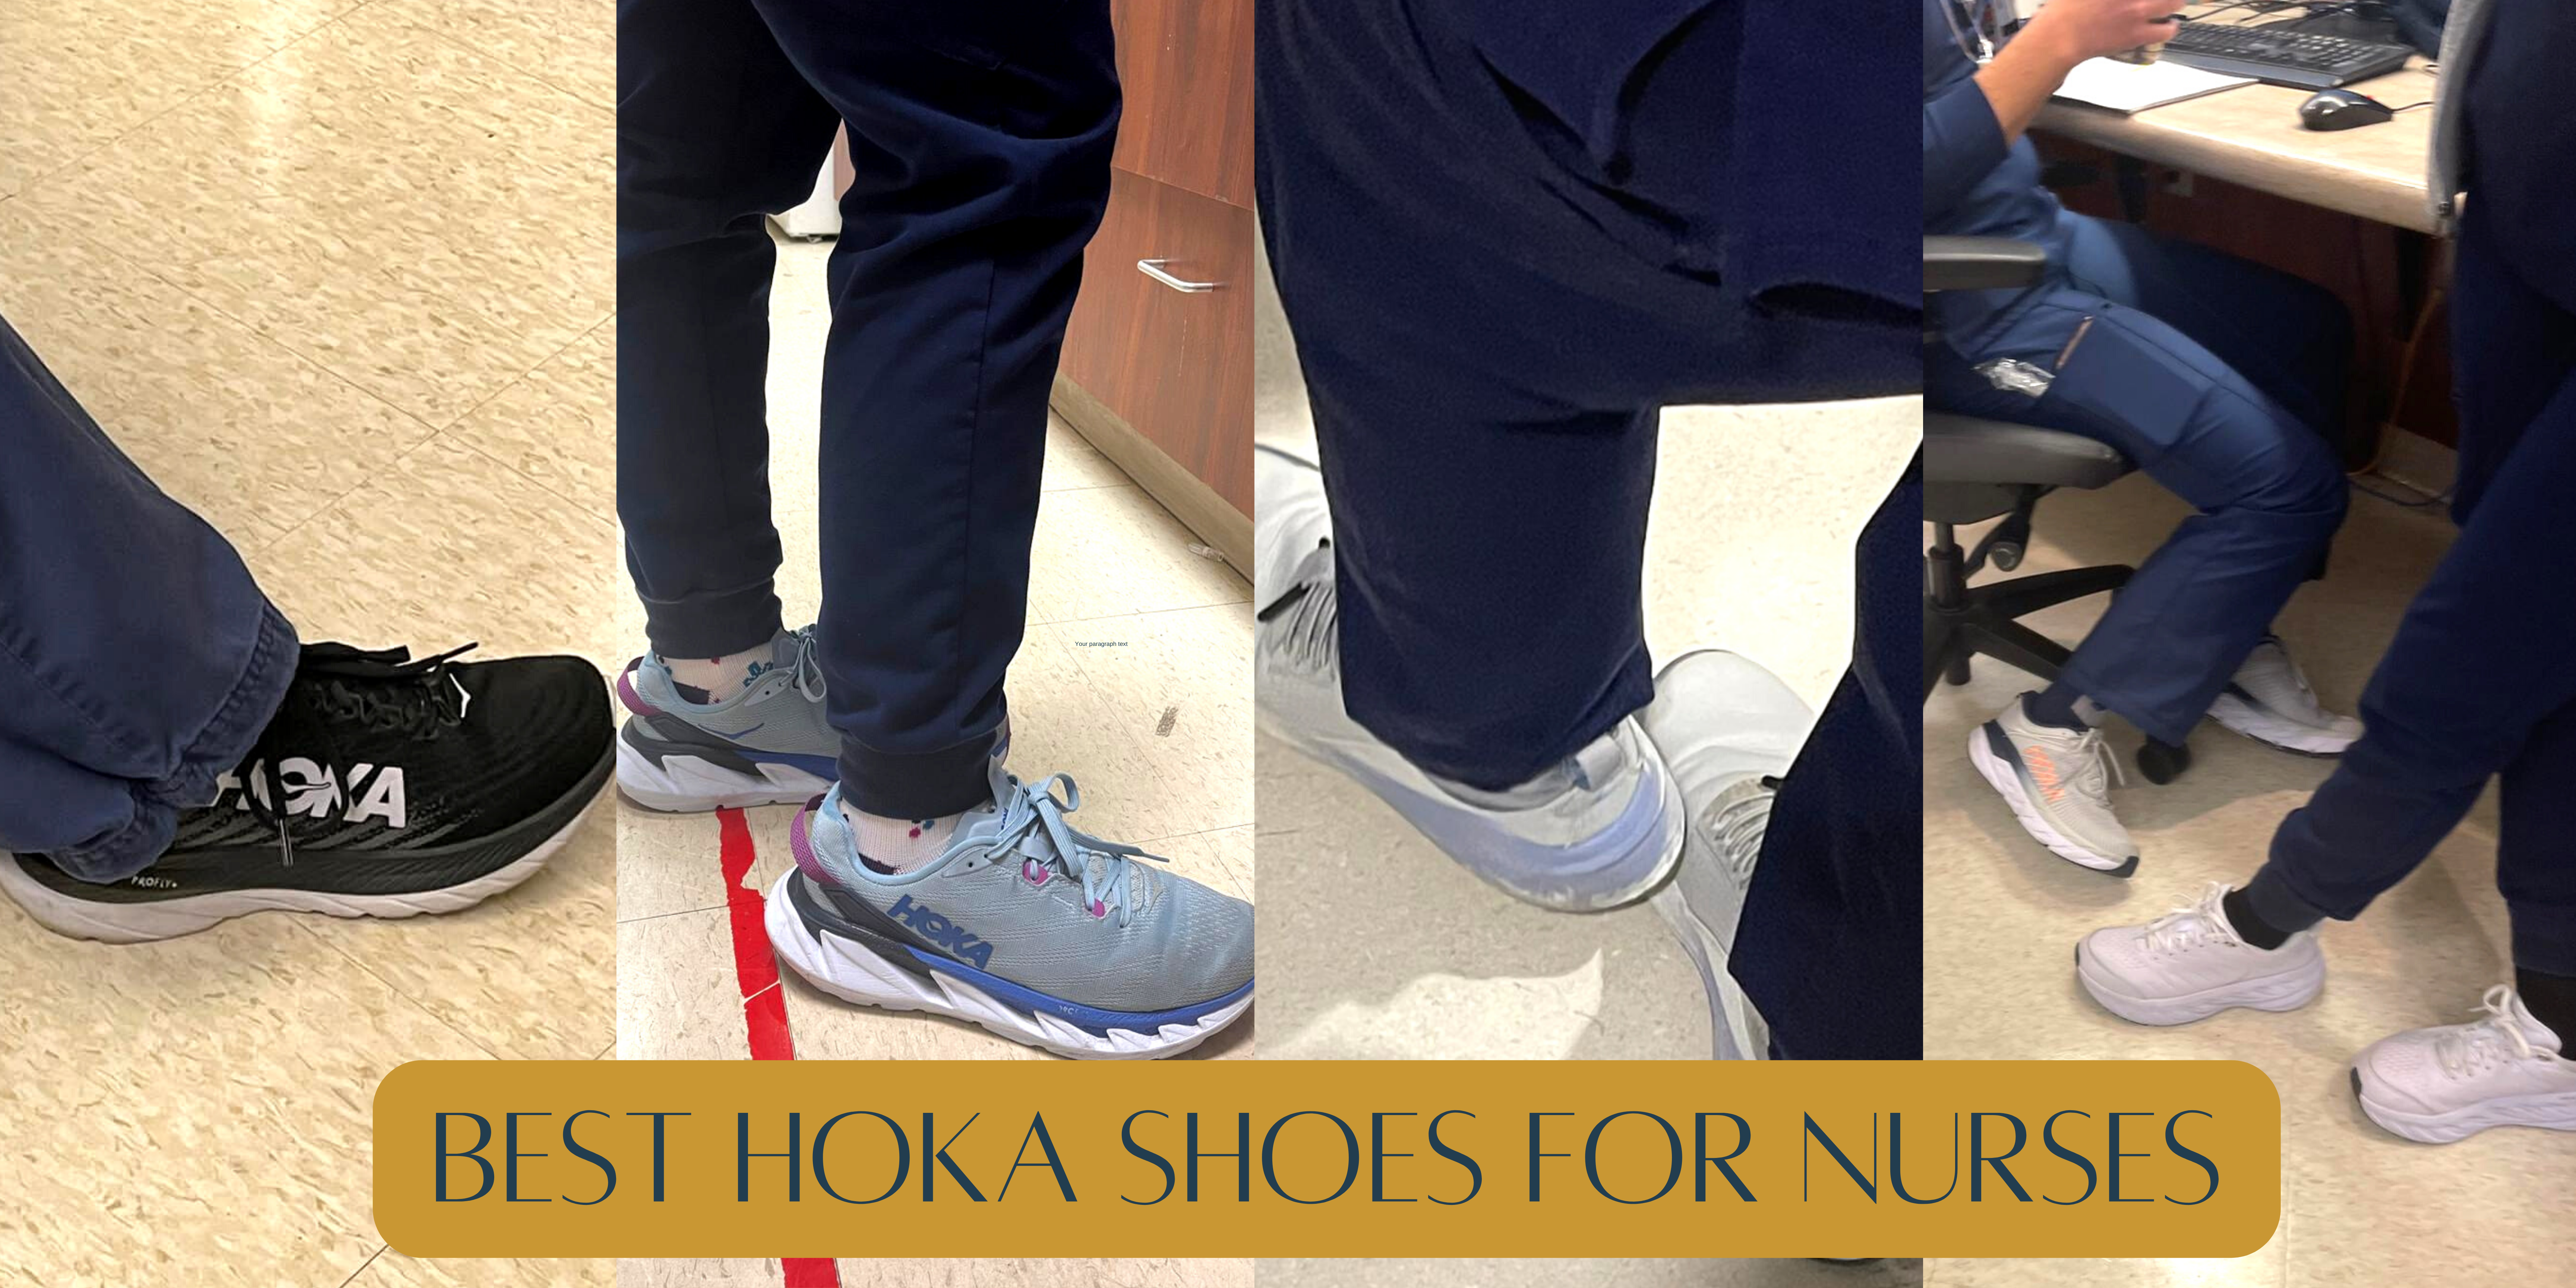 Are Hoka Shoes Good for Nurses?